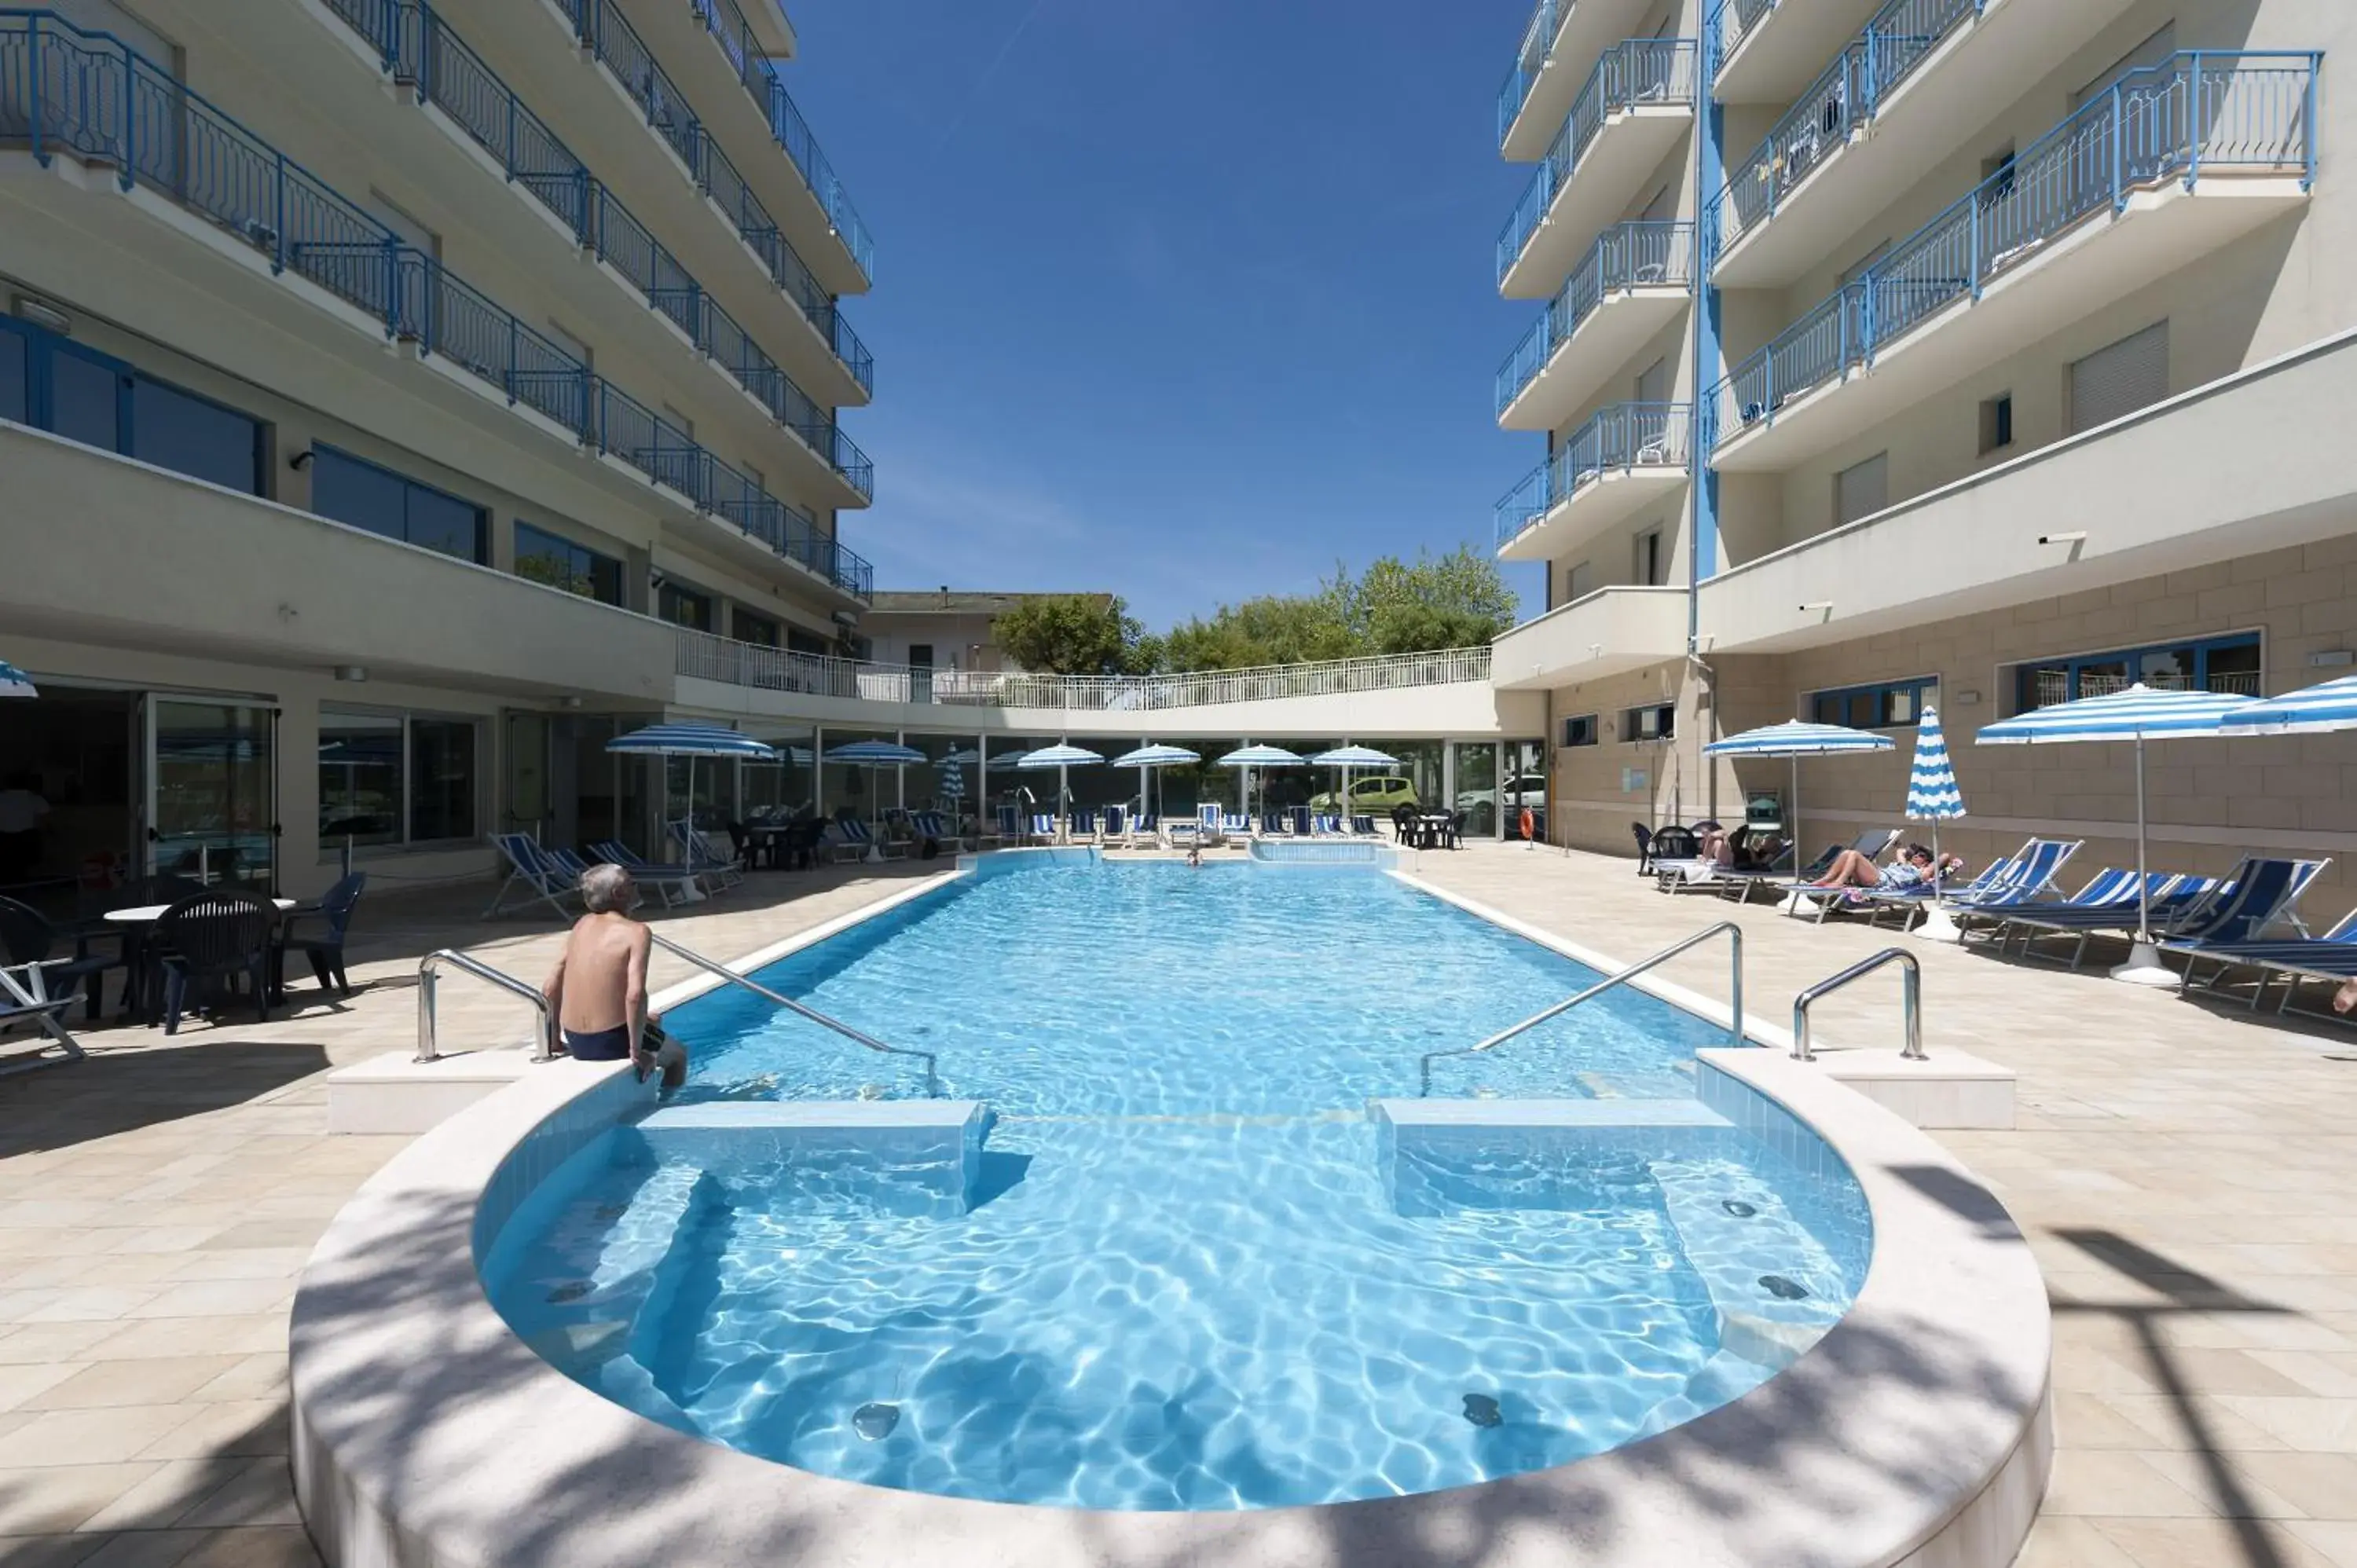 Swimming Pool in Hotel Miami